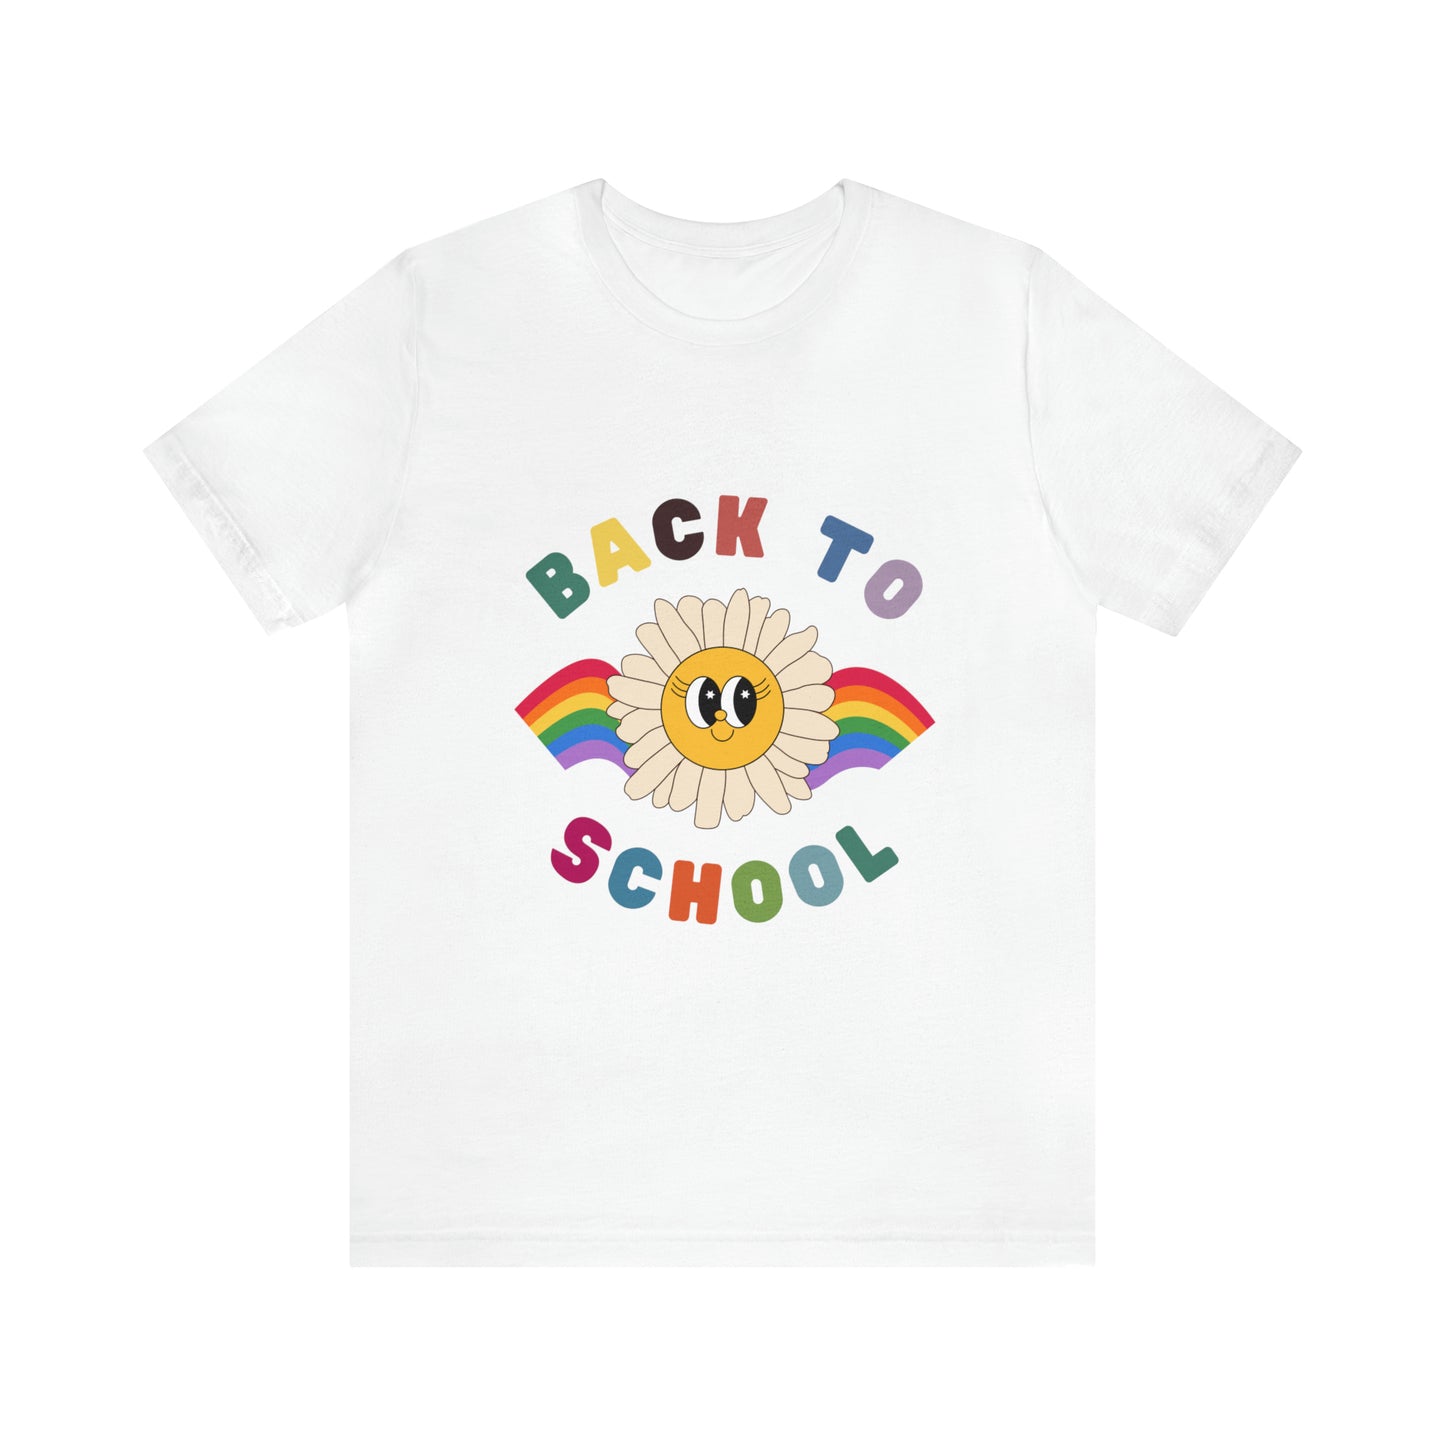 Back To School shirt,  Unisex shirt, Gift for teacher, teacher shirt, back to school shirt, teacher appreciation, teachers gift, squad shirt, team teacher shirt